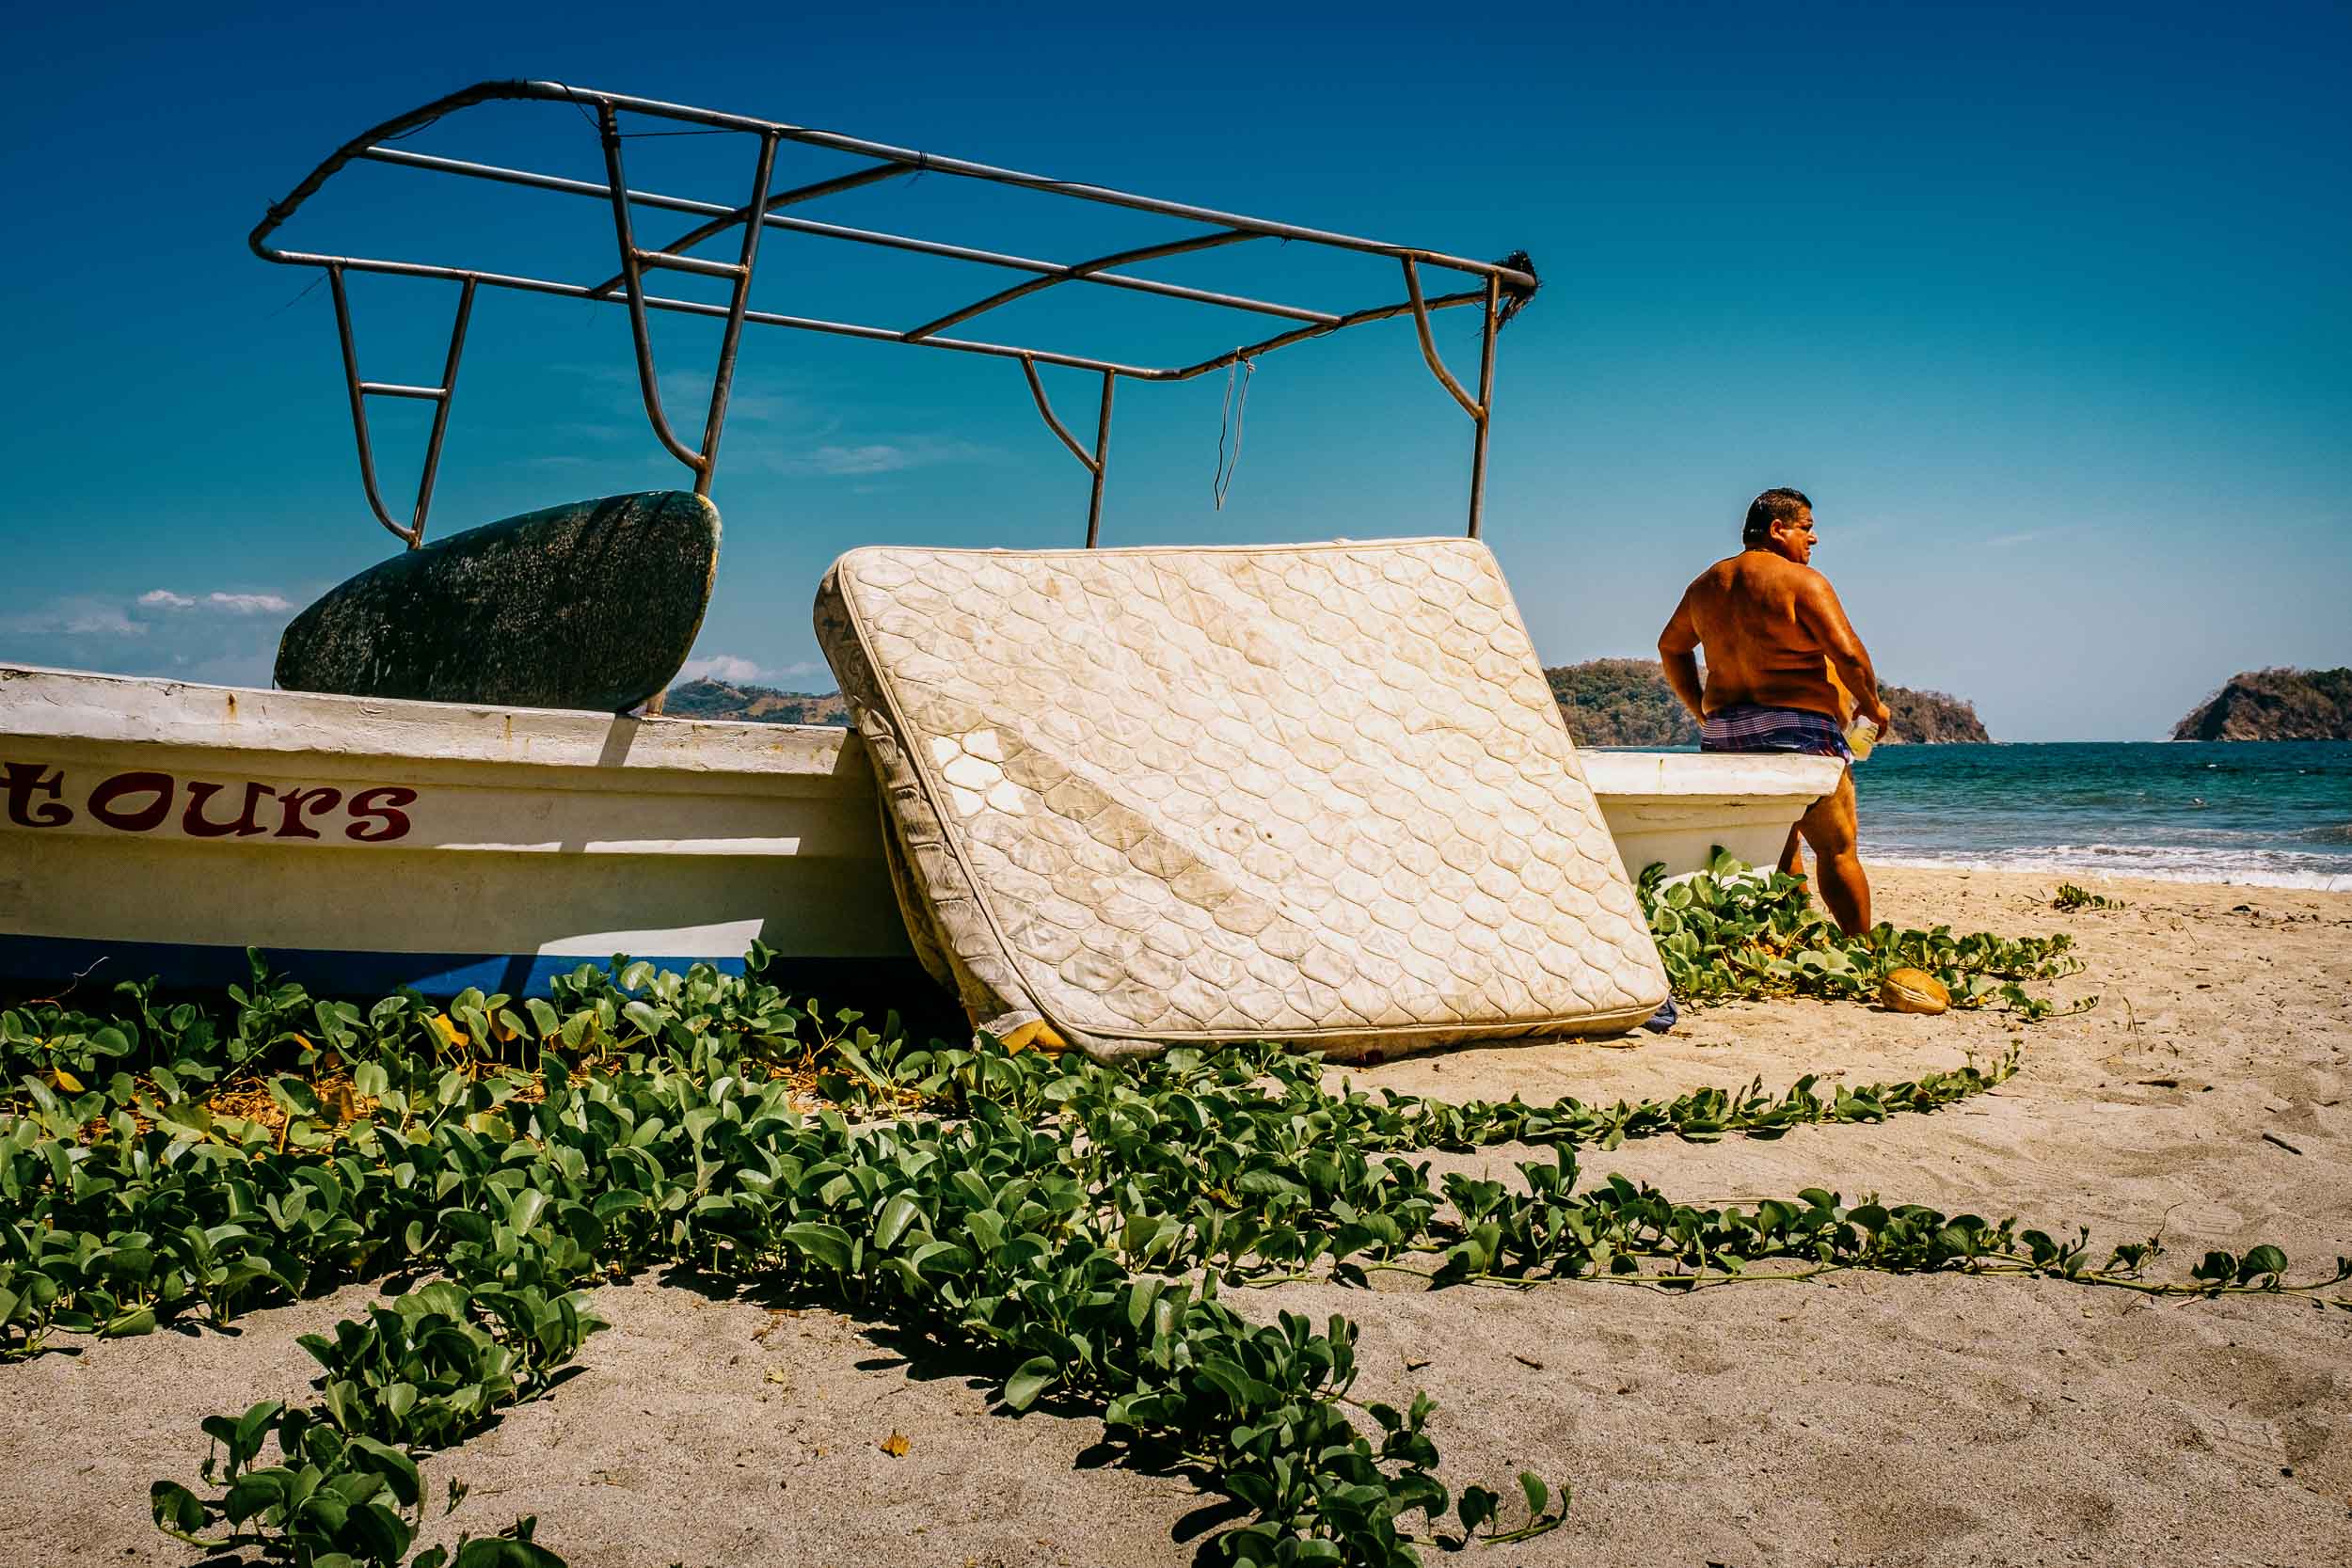 man and boat and mattress samara beach costa rica